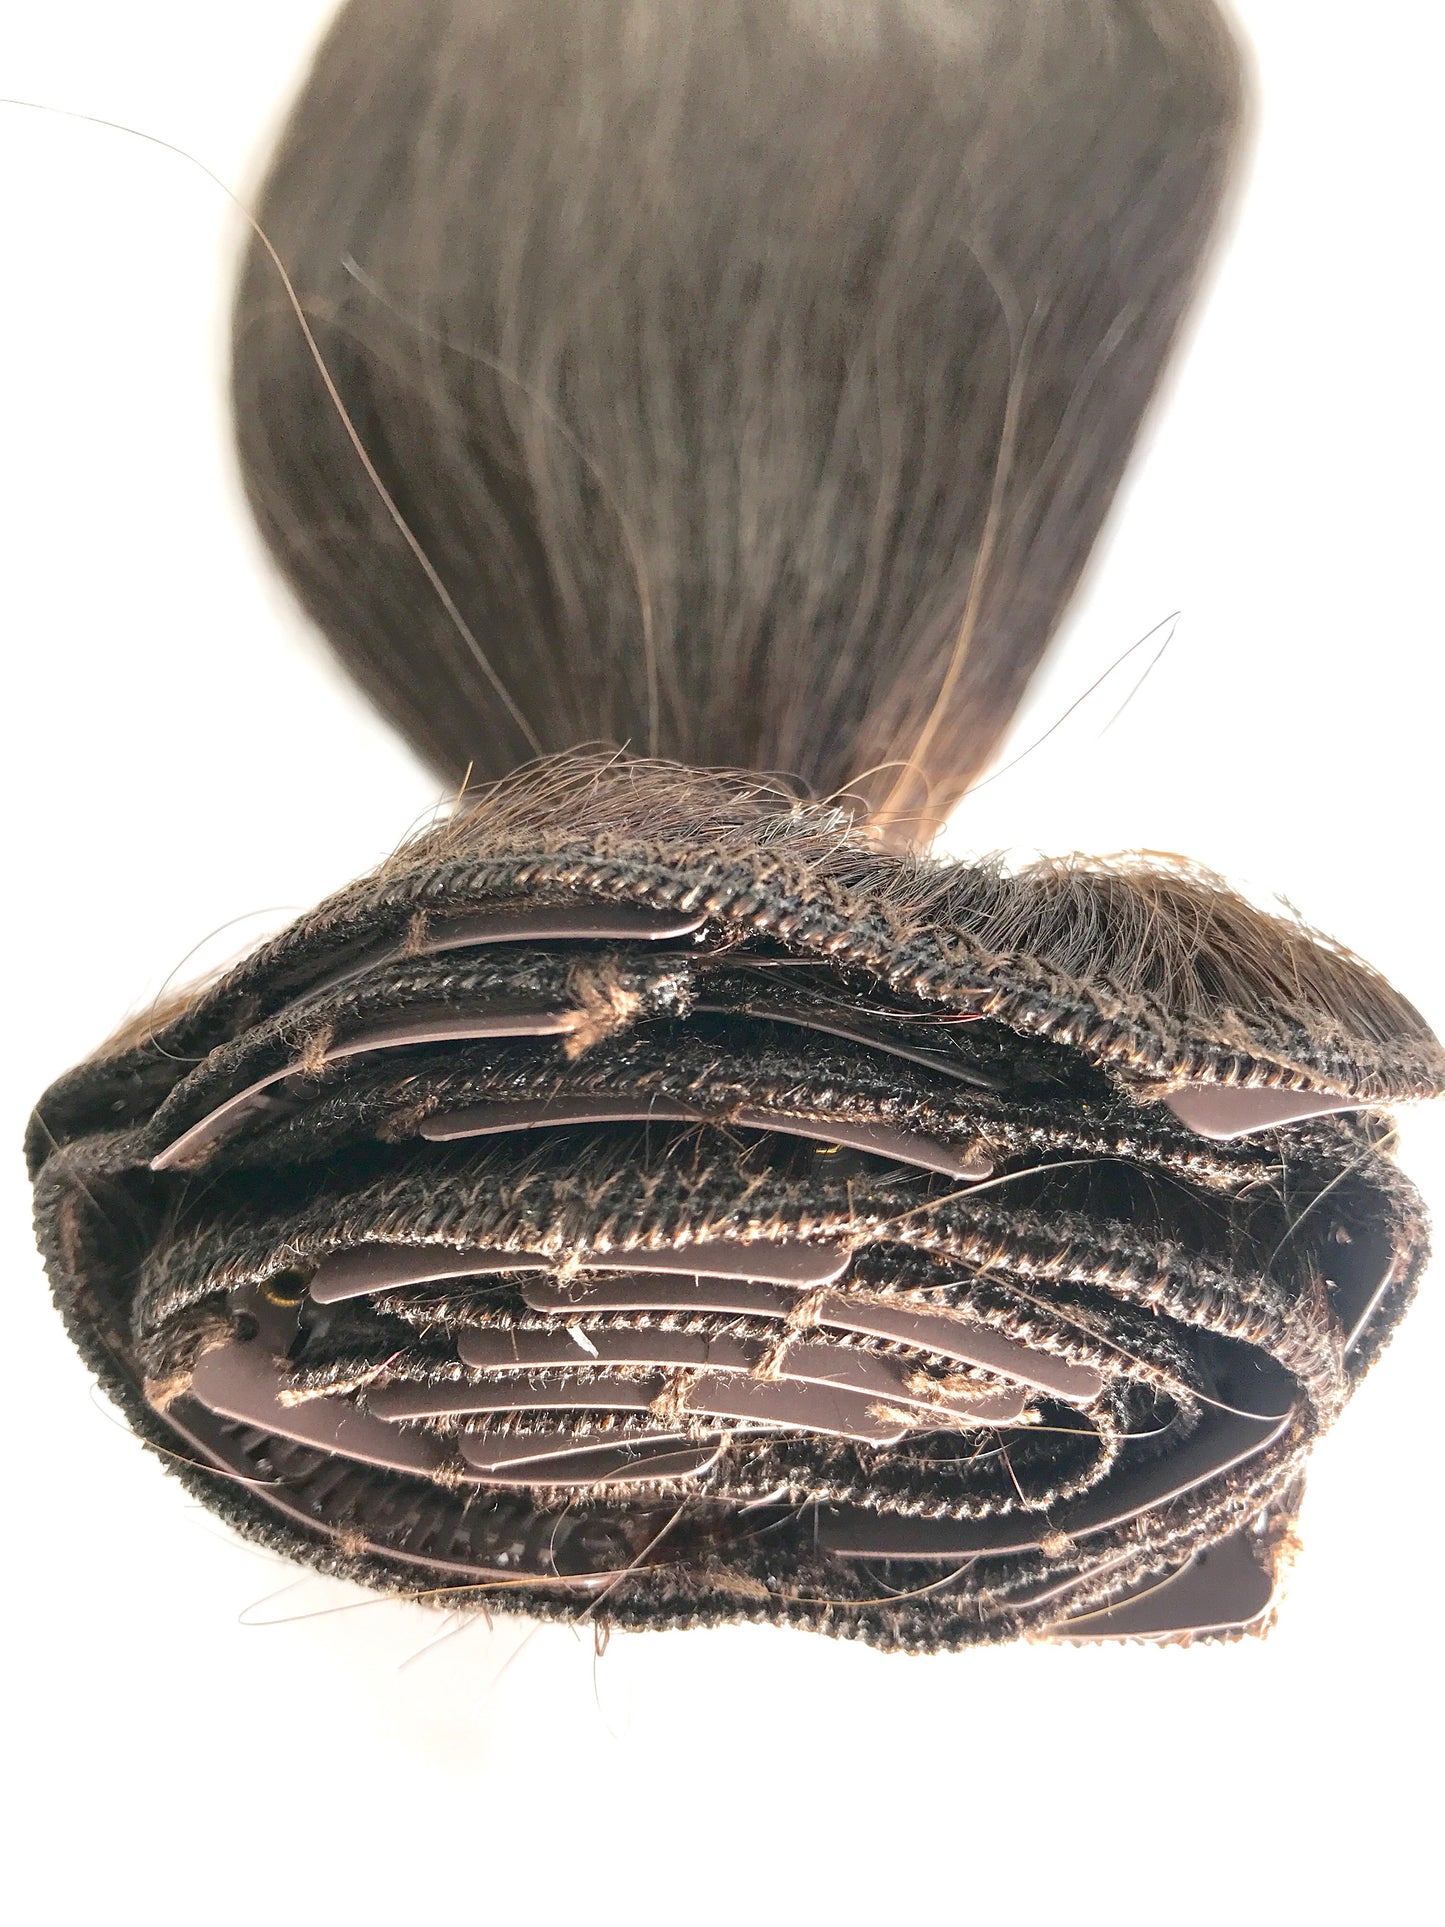 Russian Human Hair, Clip In Extensions, 28", Colour Virgin Dark Brown, 50g, Quick Shipping!